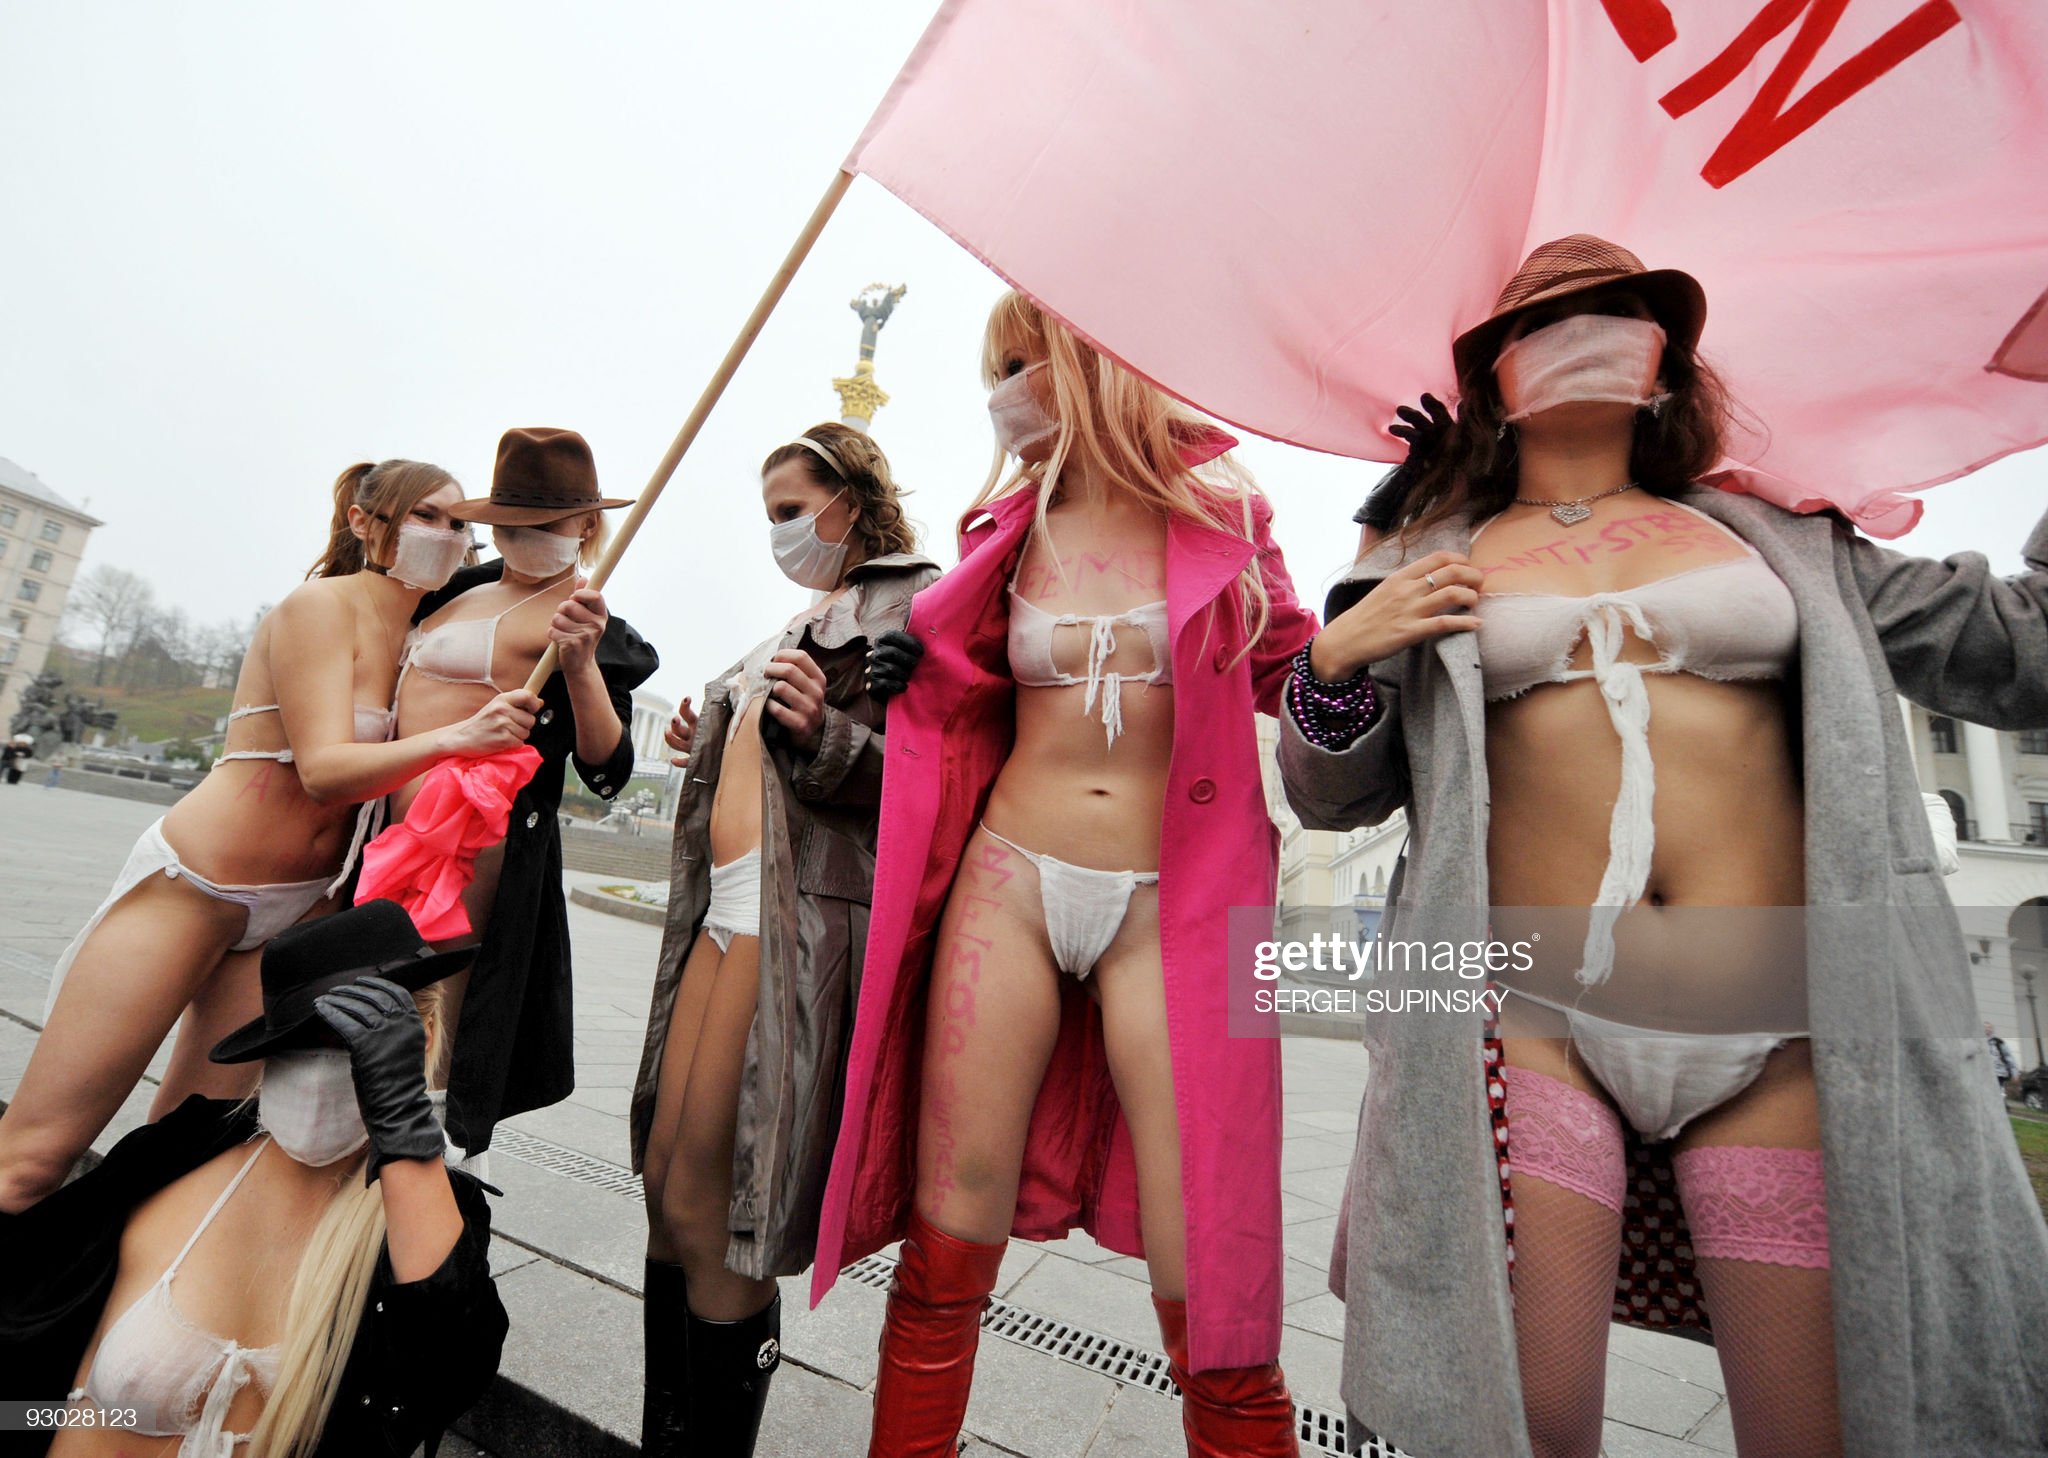 Активистки Femen